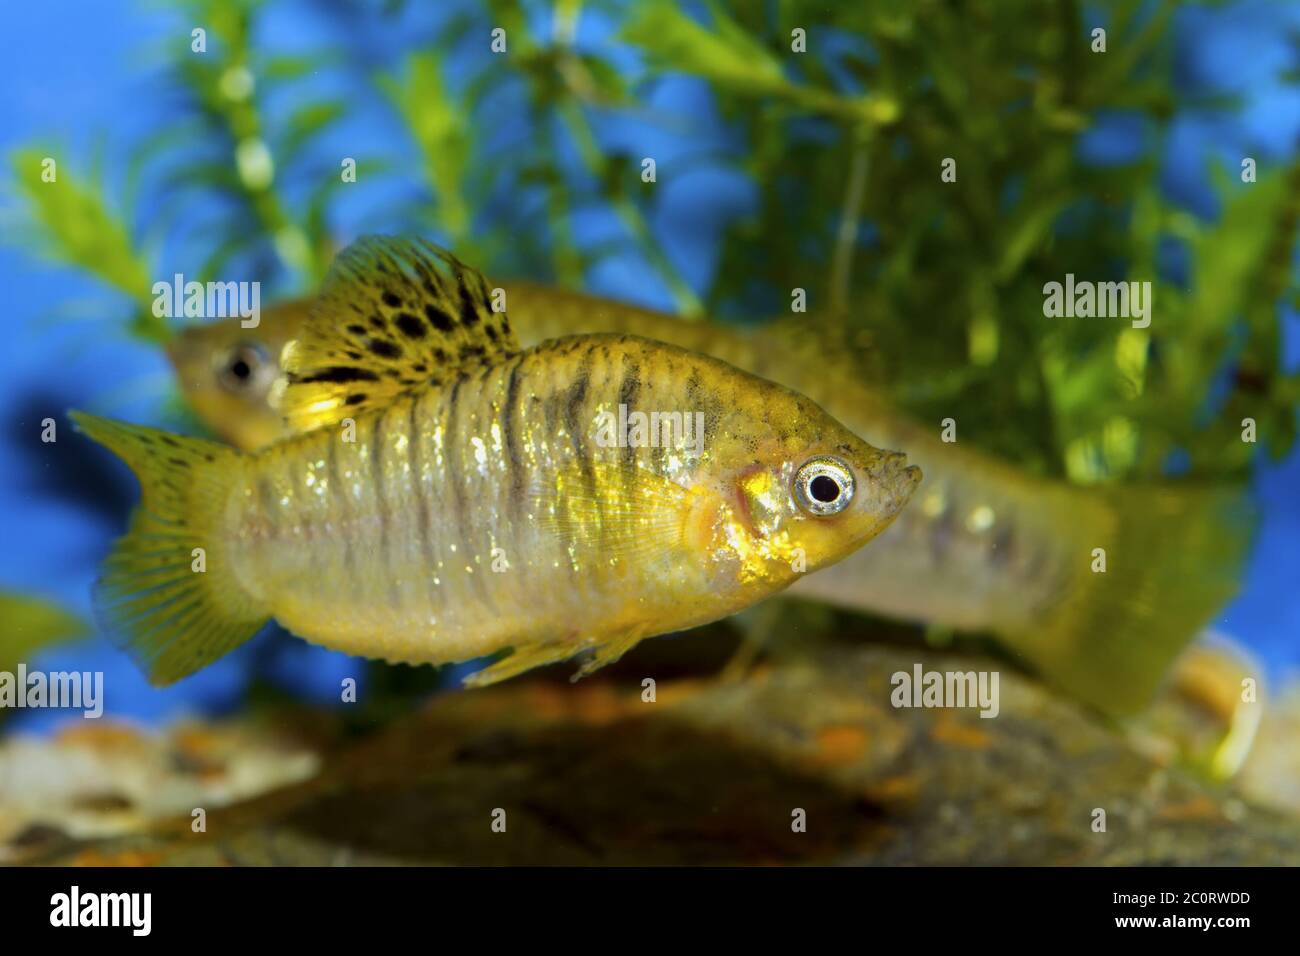 Fish from genus Poecilia Stock Photo